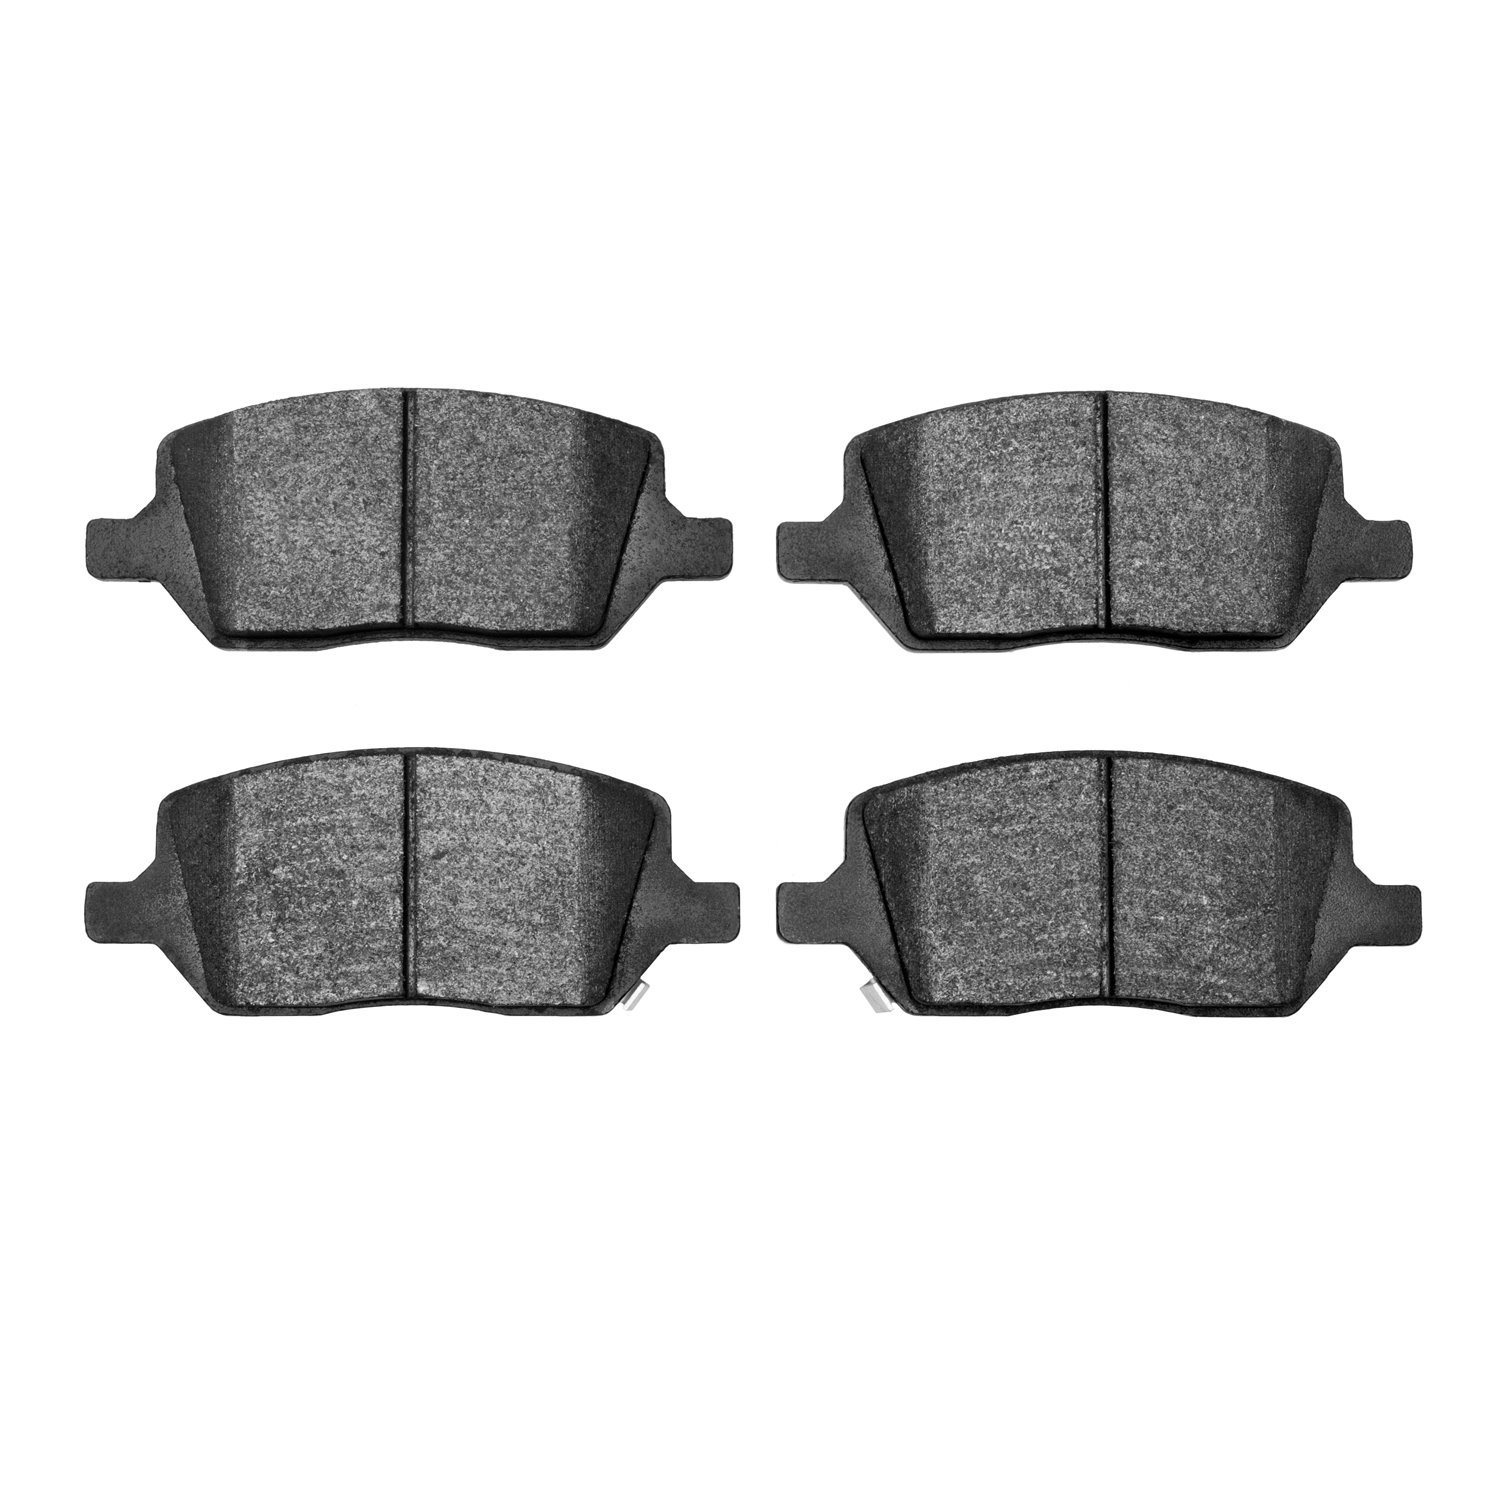 1310-1093-00 3000-Series Ceramic Brake Pads, 2005-2015 GM, Position: Rear